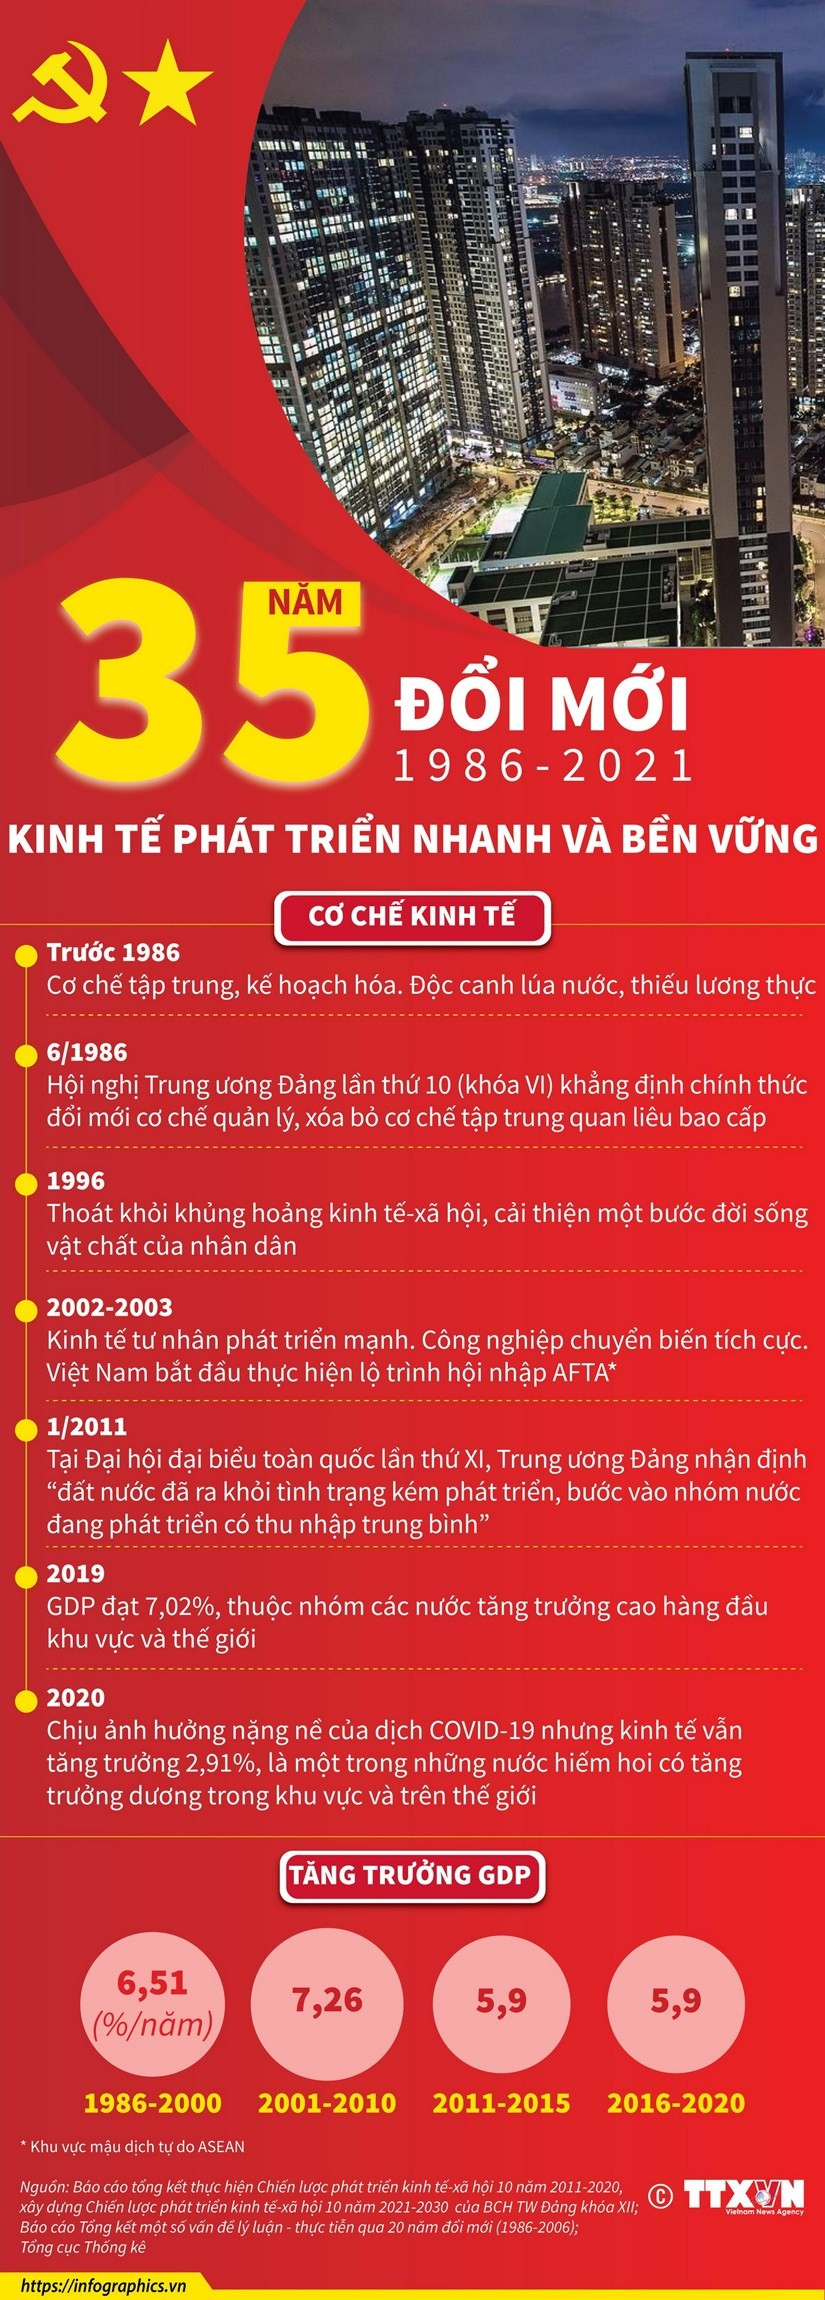 35 nam doi moi: Kinh te Viet Nam phat trien nhanh va ben vung hinh anh 1